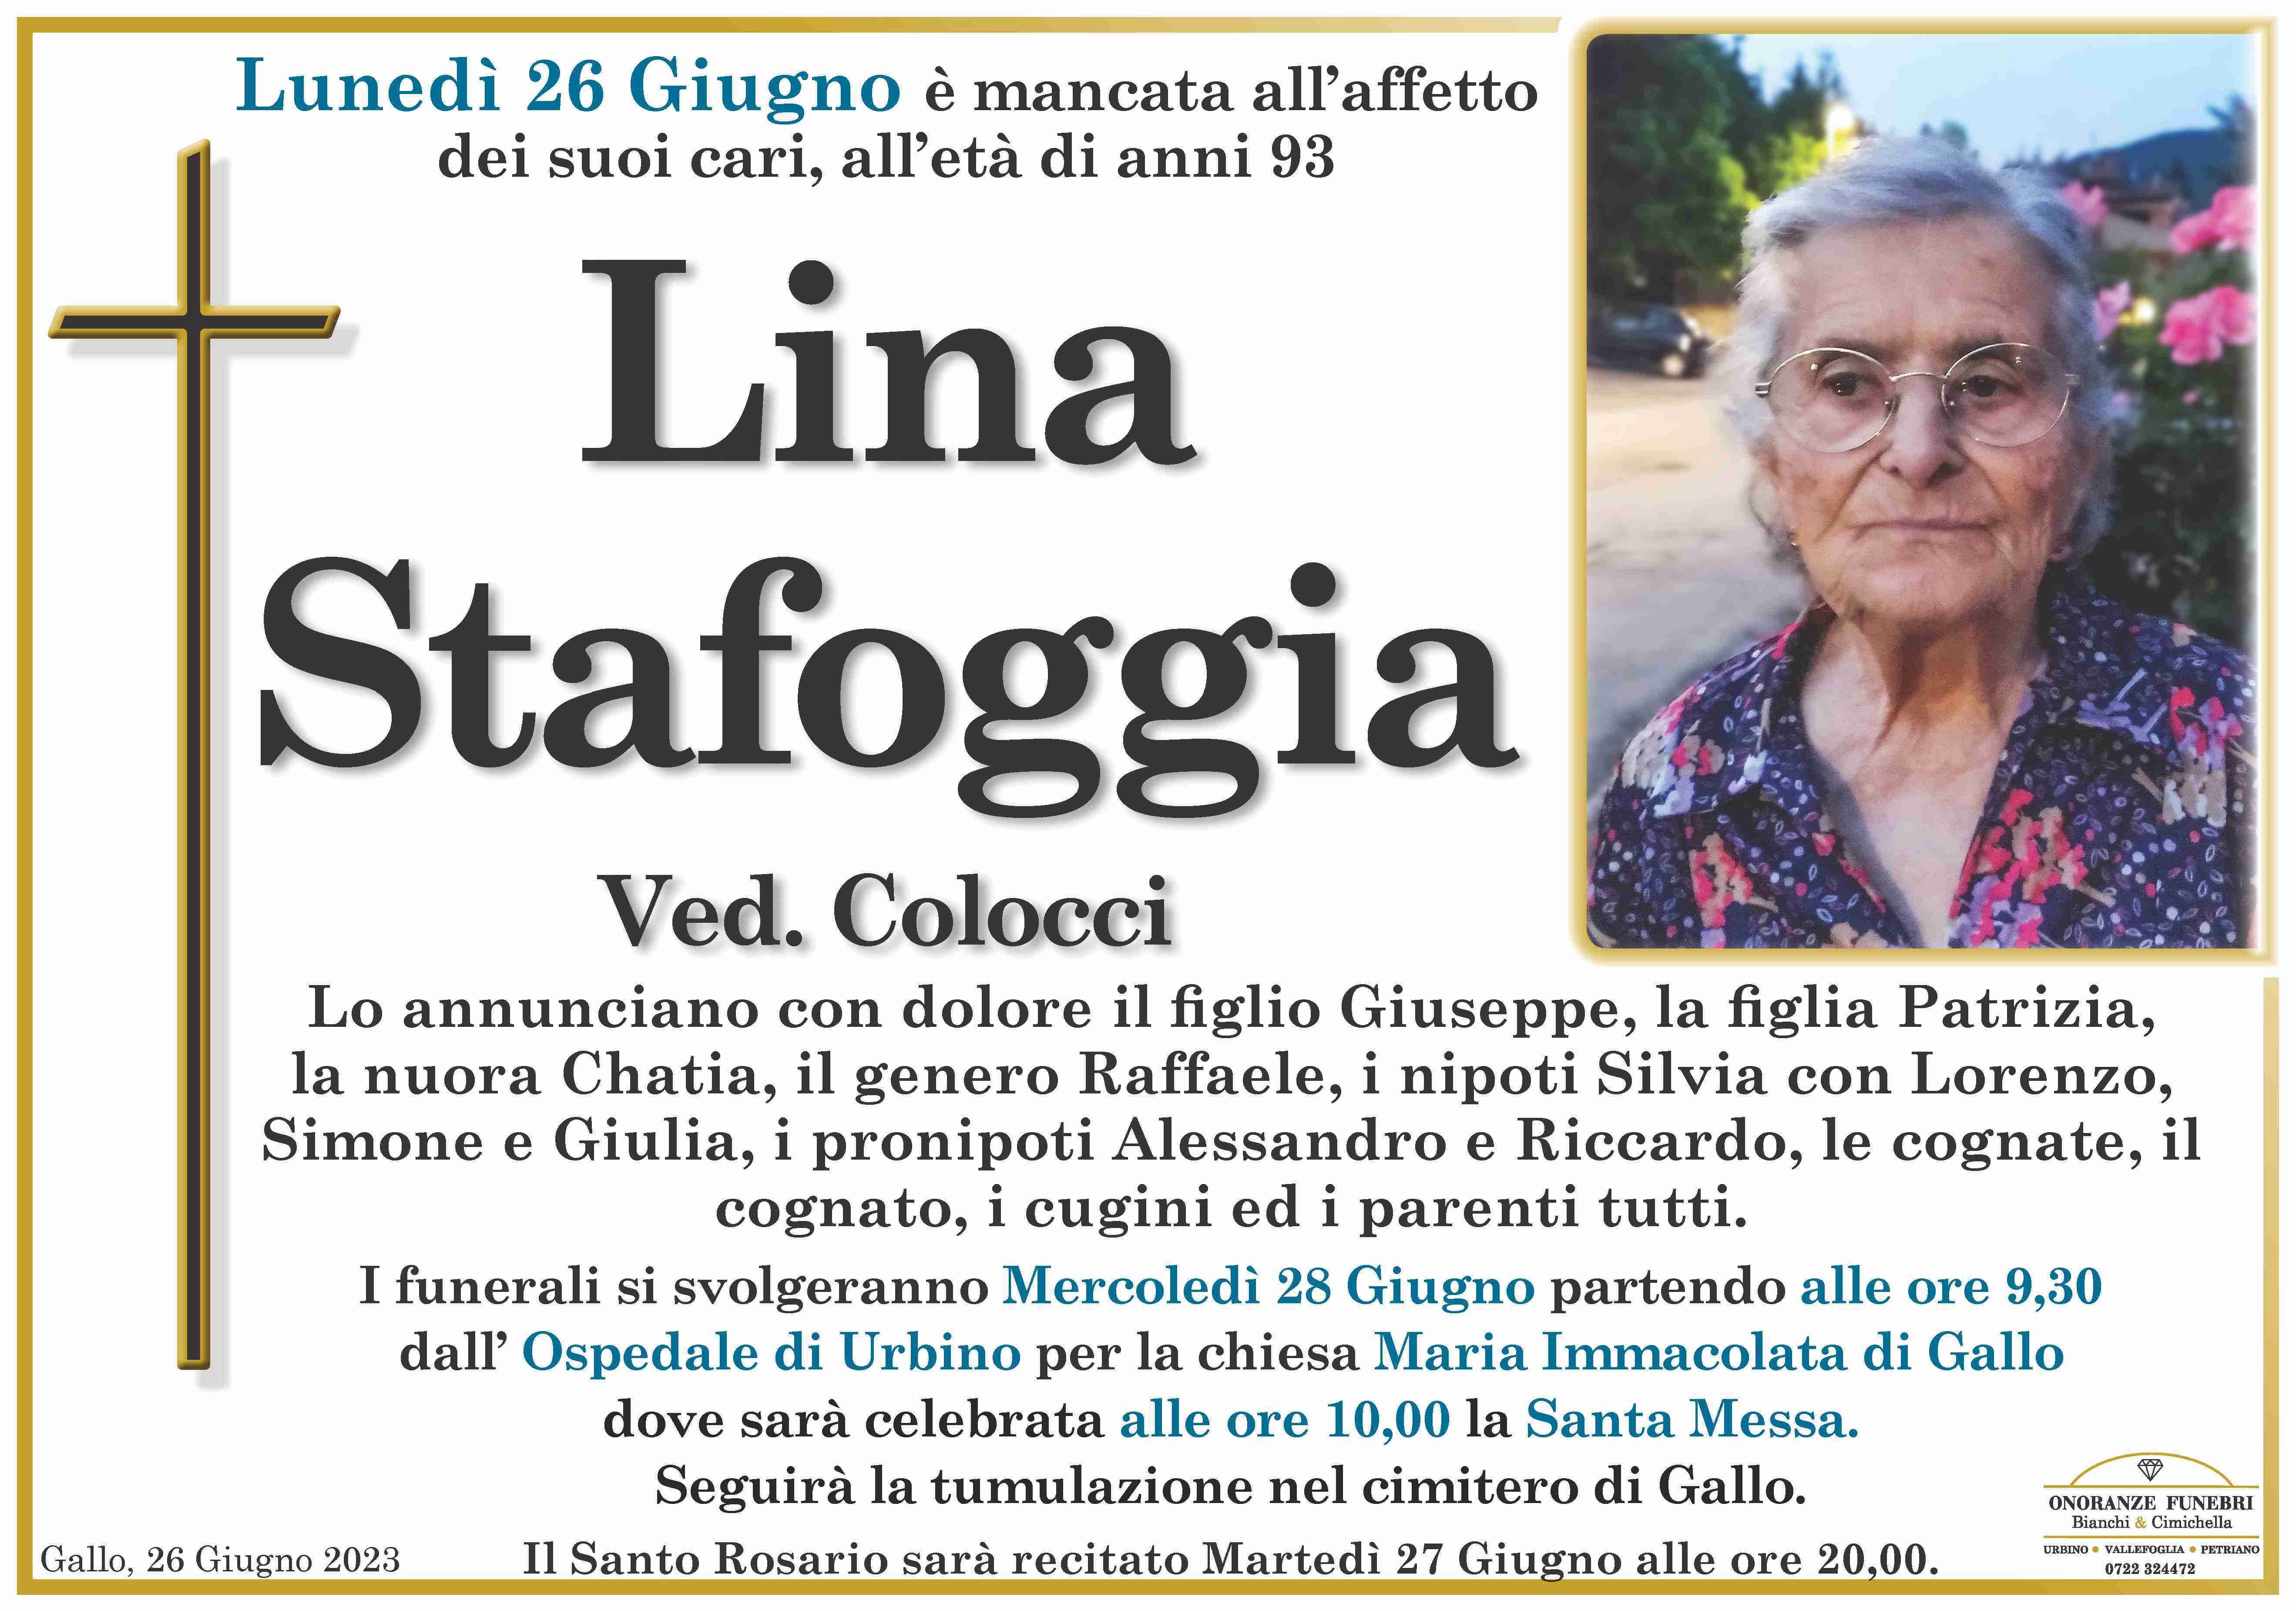 Lina Stafoggia